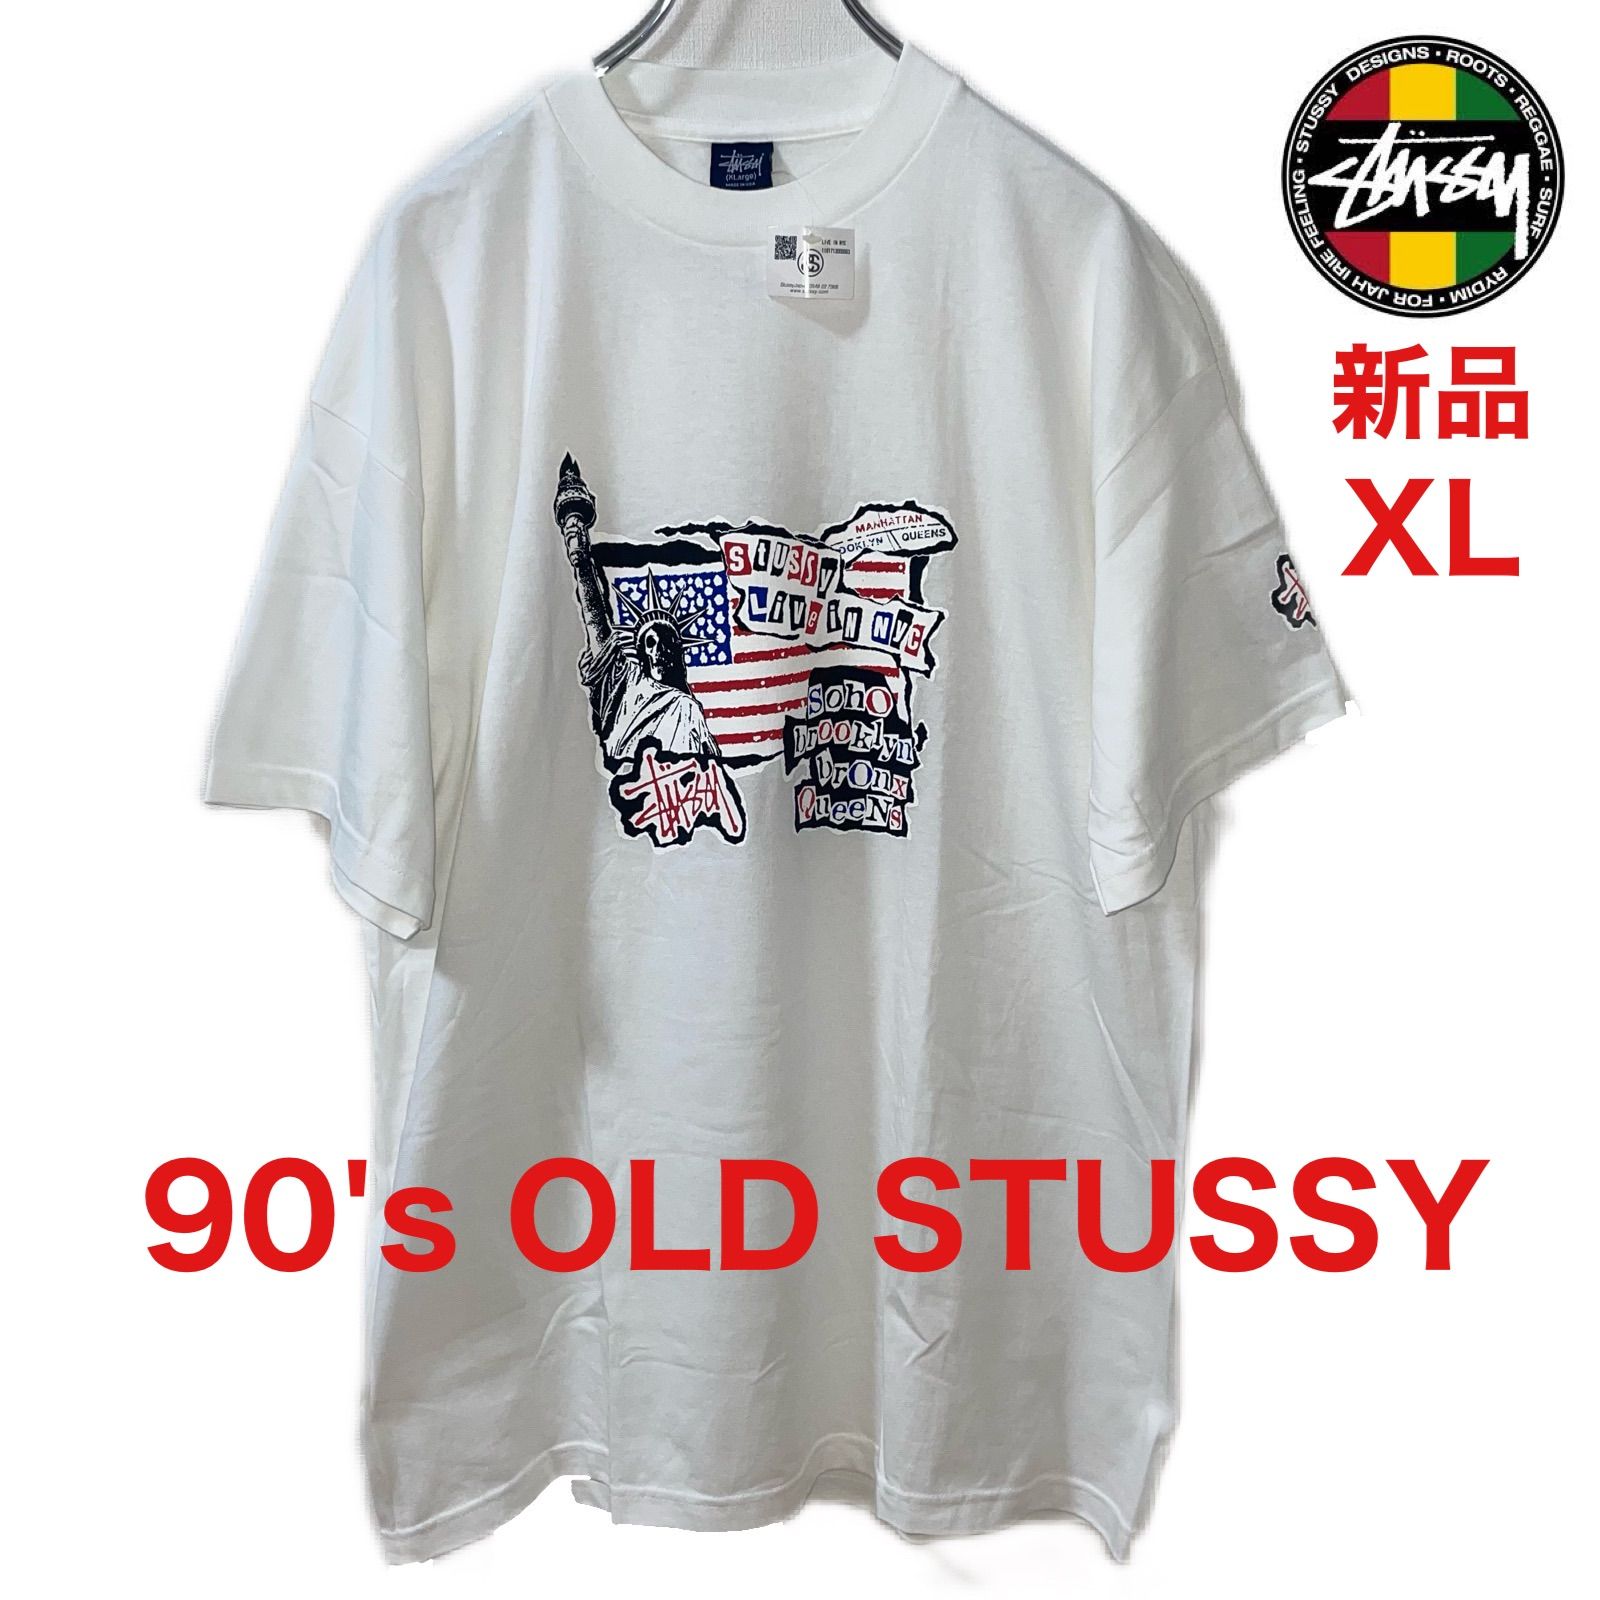 90's OLD STUSSY LIVE IN NYC TEE 紺タグ USA製 激レア新品 - メリカル